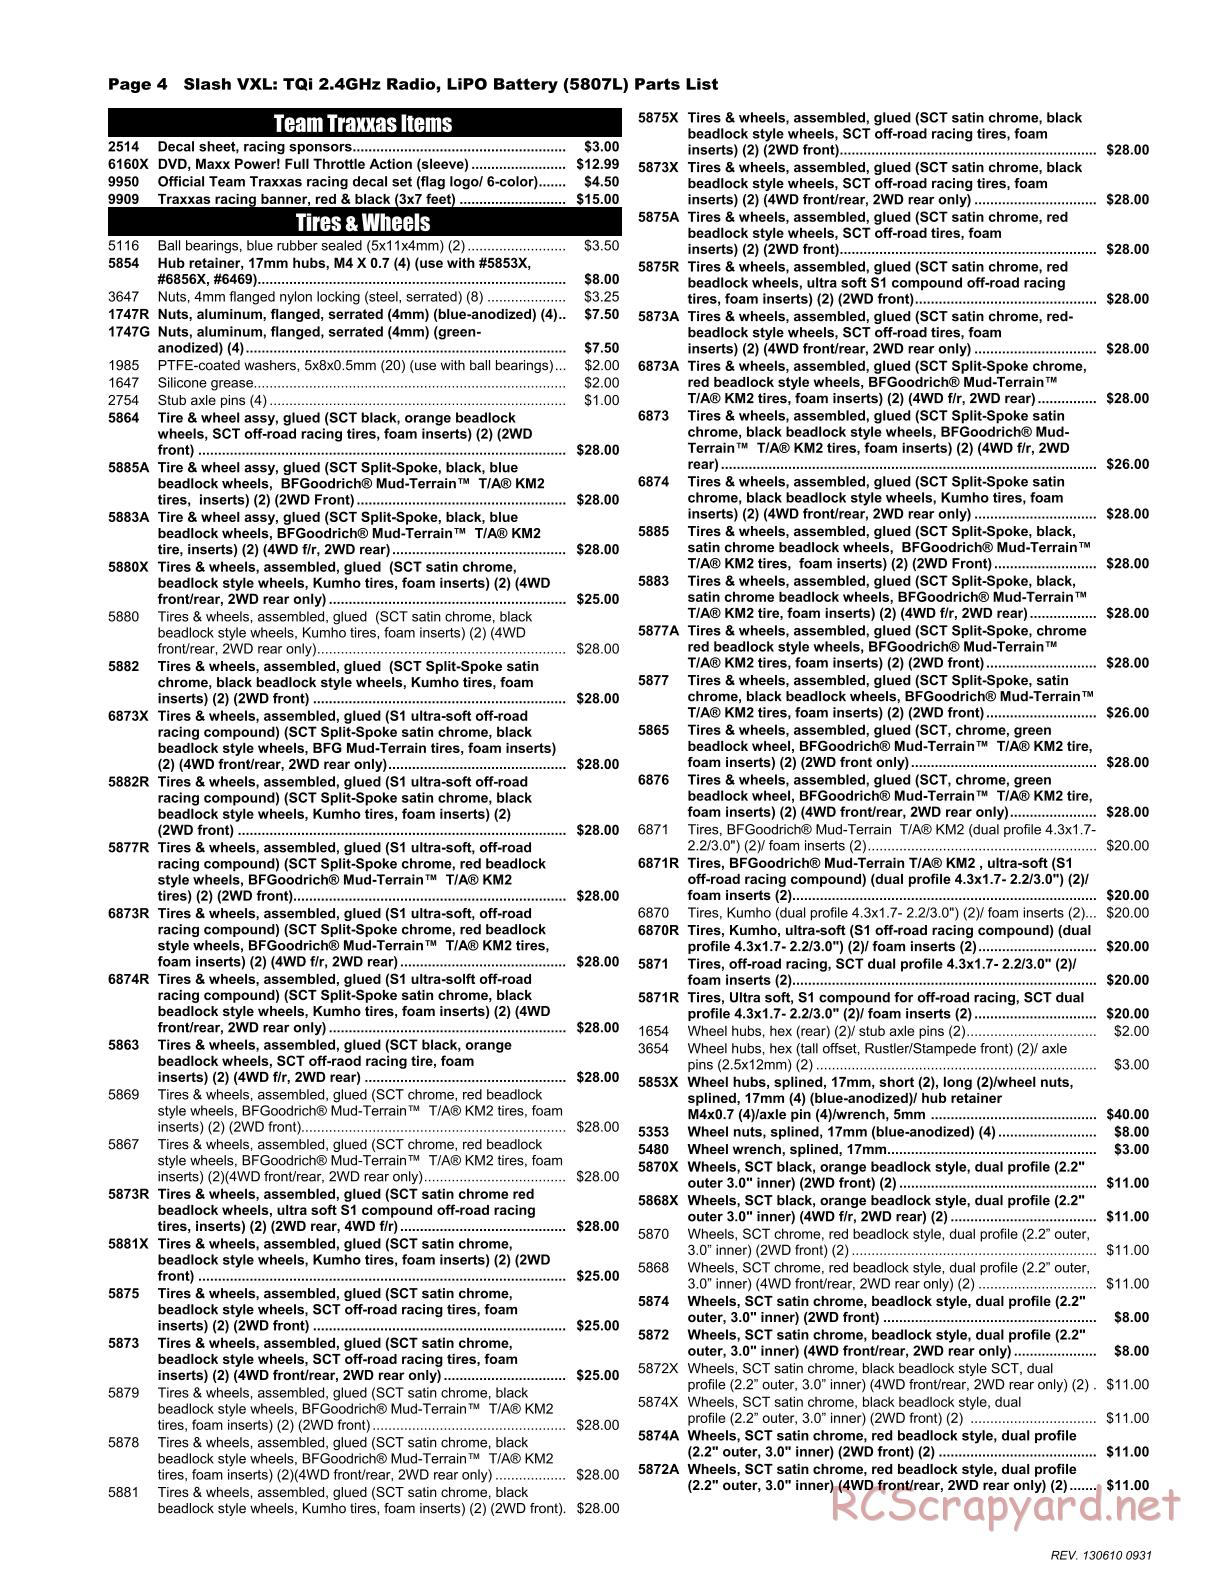 Traxxas - Slash 2WD VXL LiPo (2012) - Parts List - Page 4